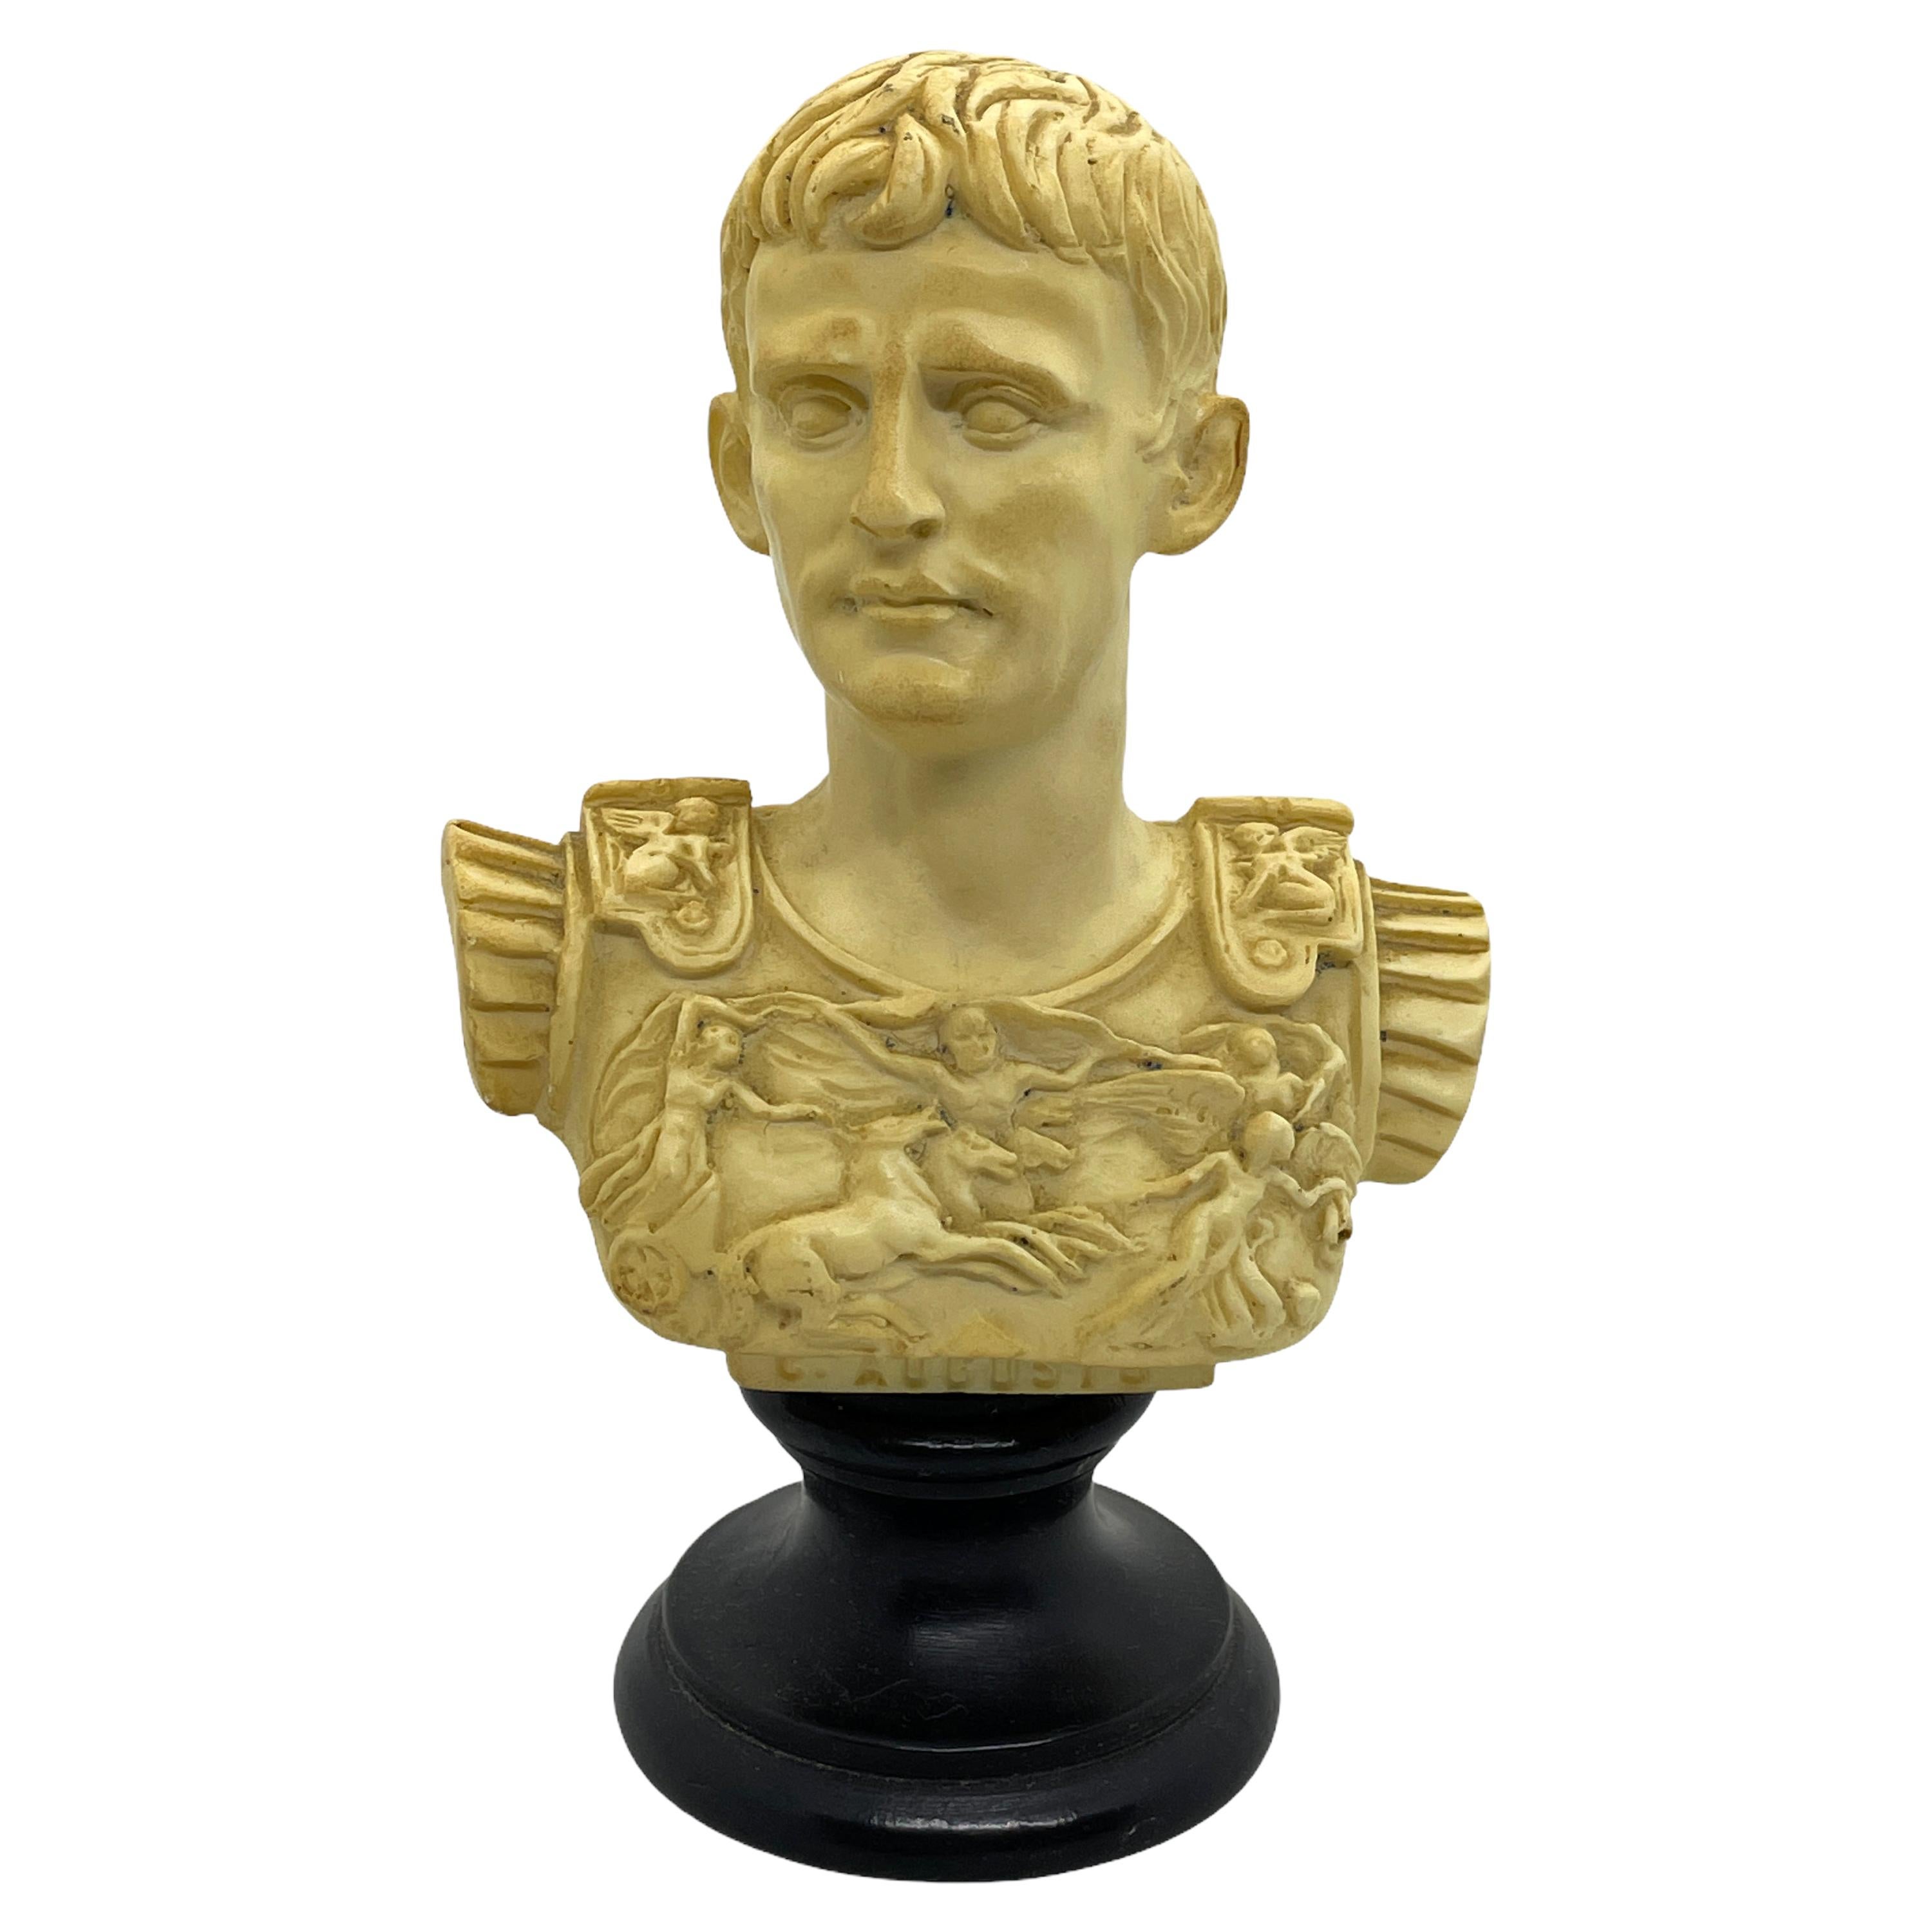 Vintage Decorative Roman or Greek Bust Statue, 1960s